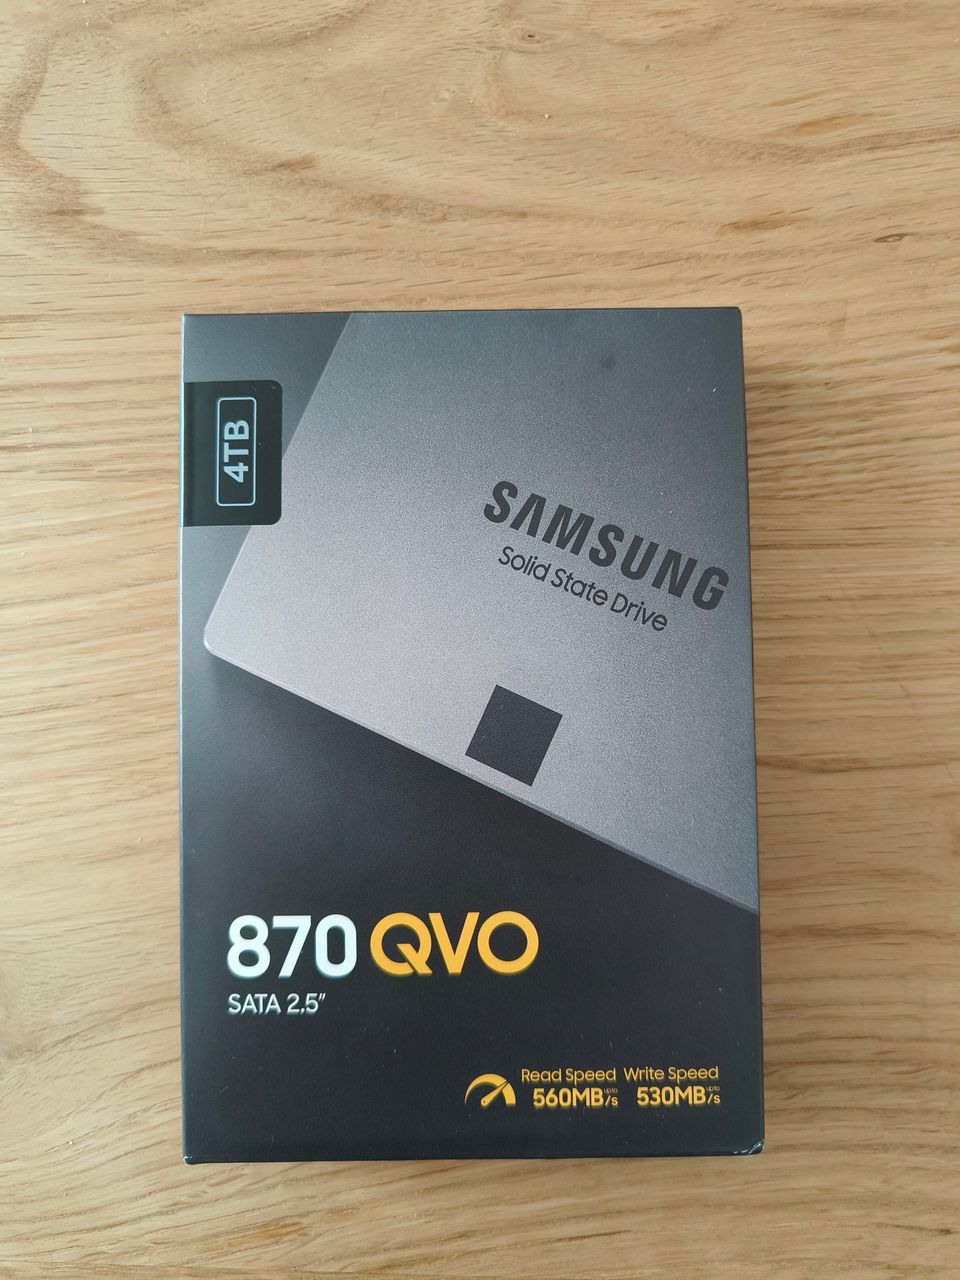 Samsung 870 QVO 4tb SSD